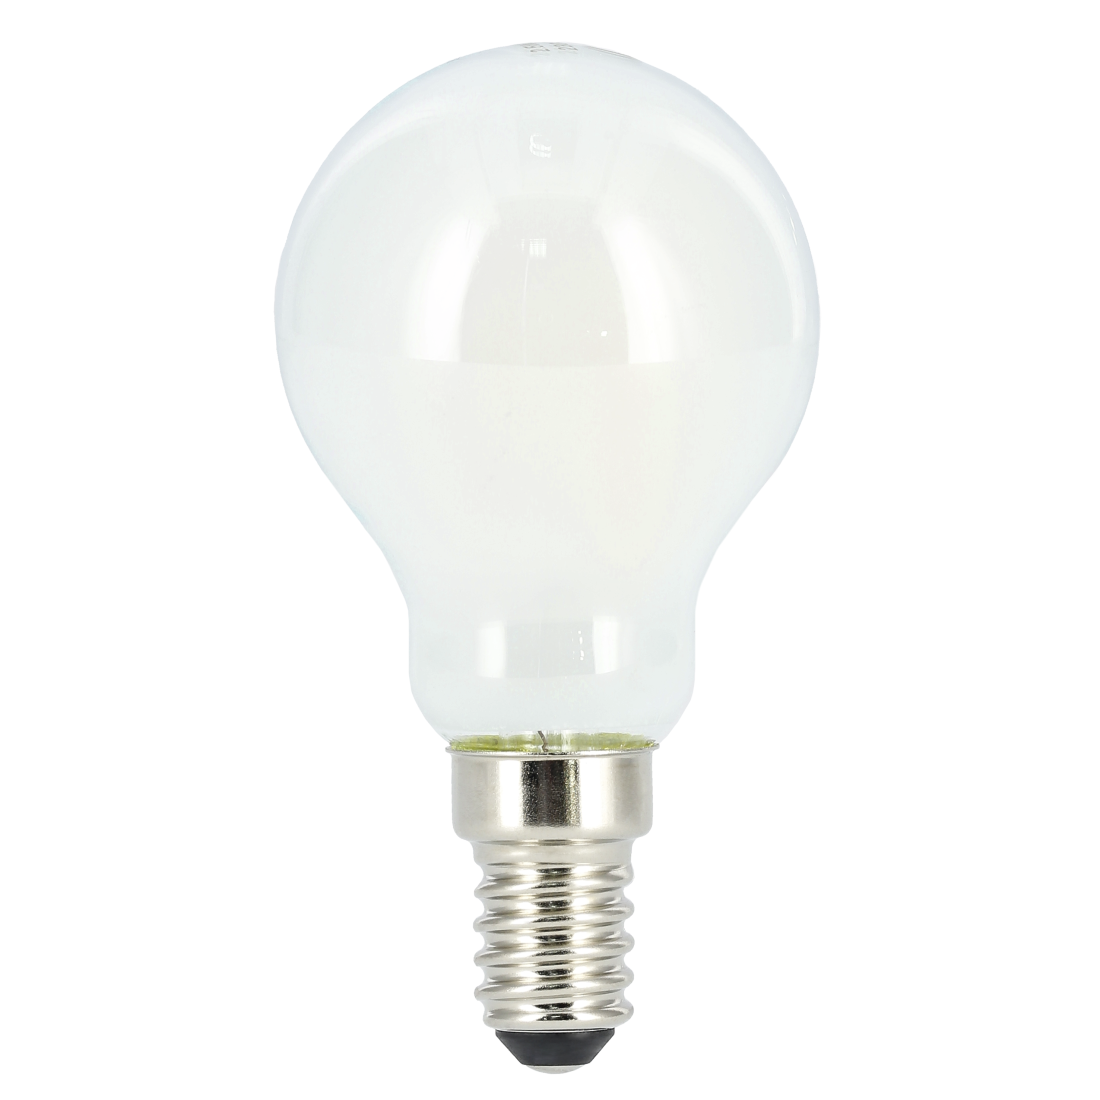 abx High-Res Image - Xavax, Ampoule filament LED, E14, 470lm rempl. 40W, amp. sphr., mate, blc chd